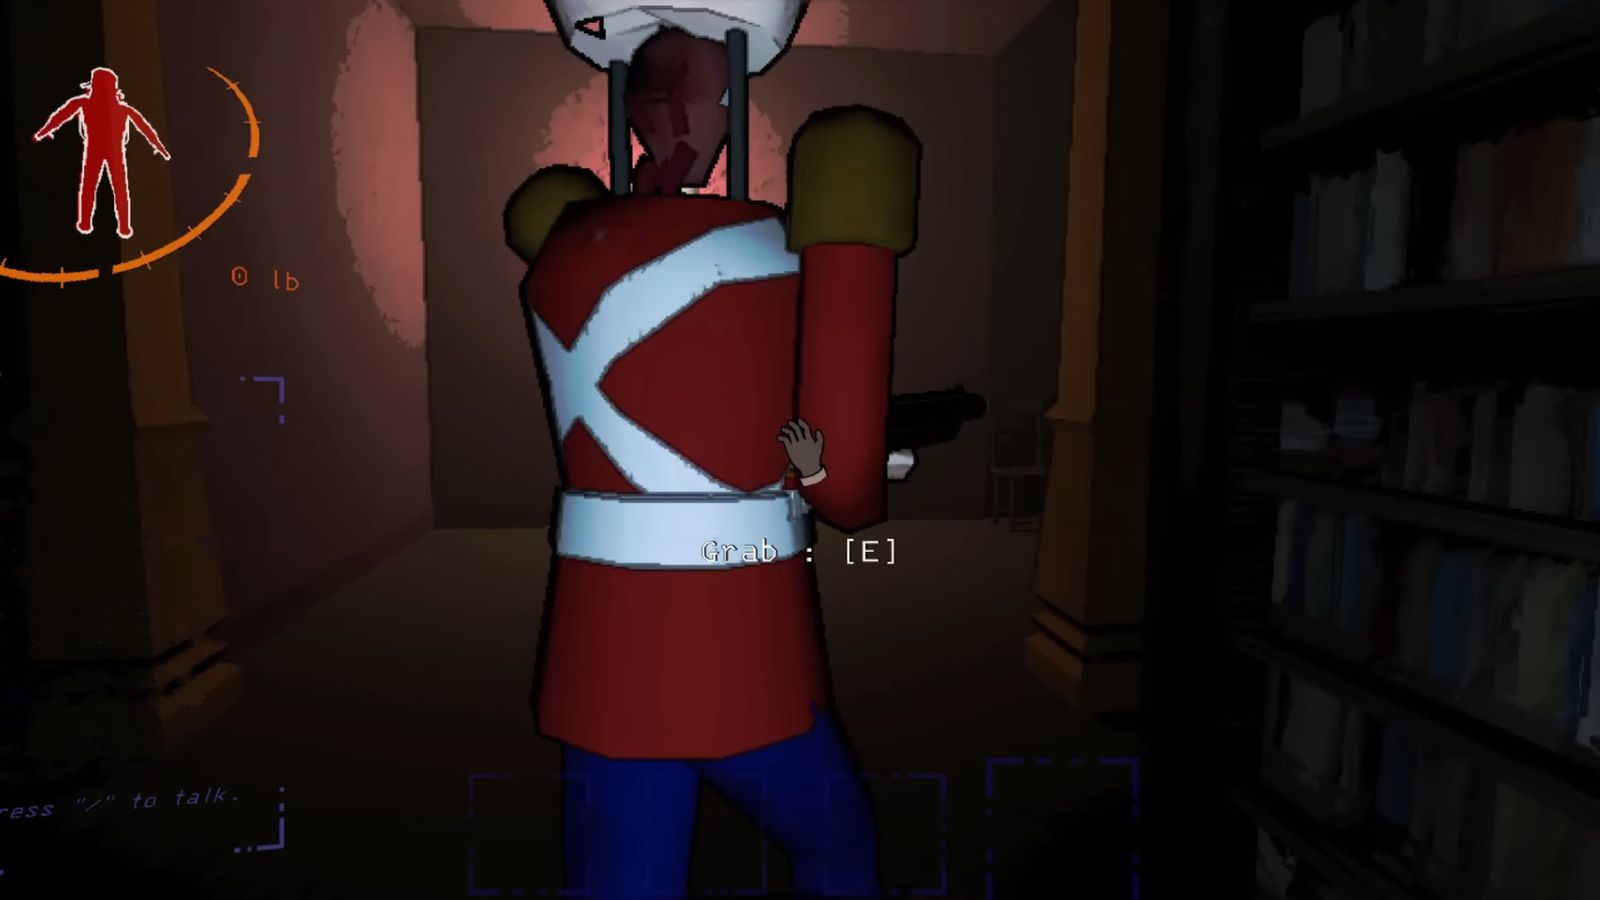 Lethal Company - "Grab : [E]", player crouching behind a Nutcracker enemy holding a shotgun